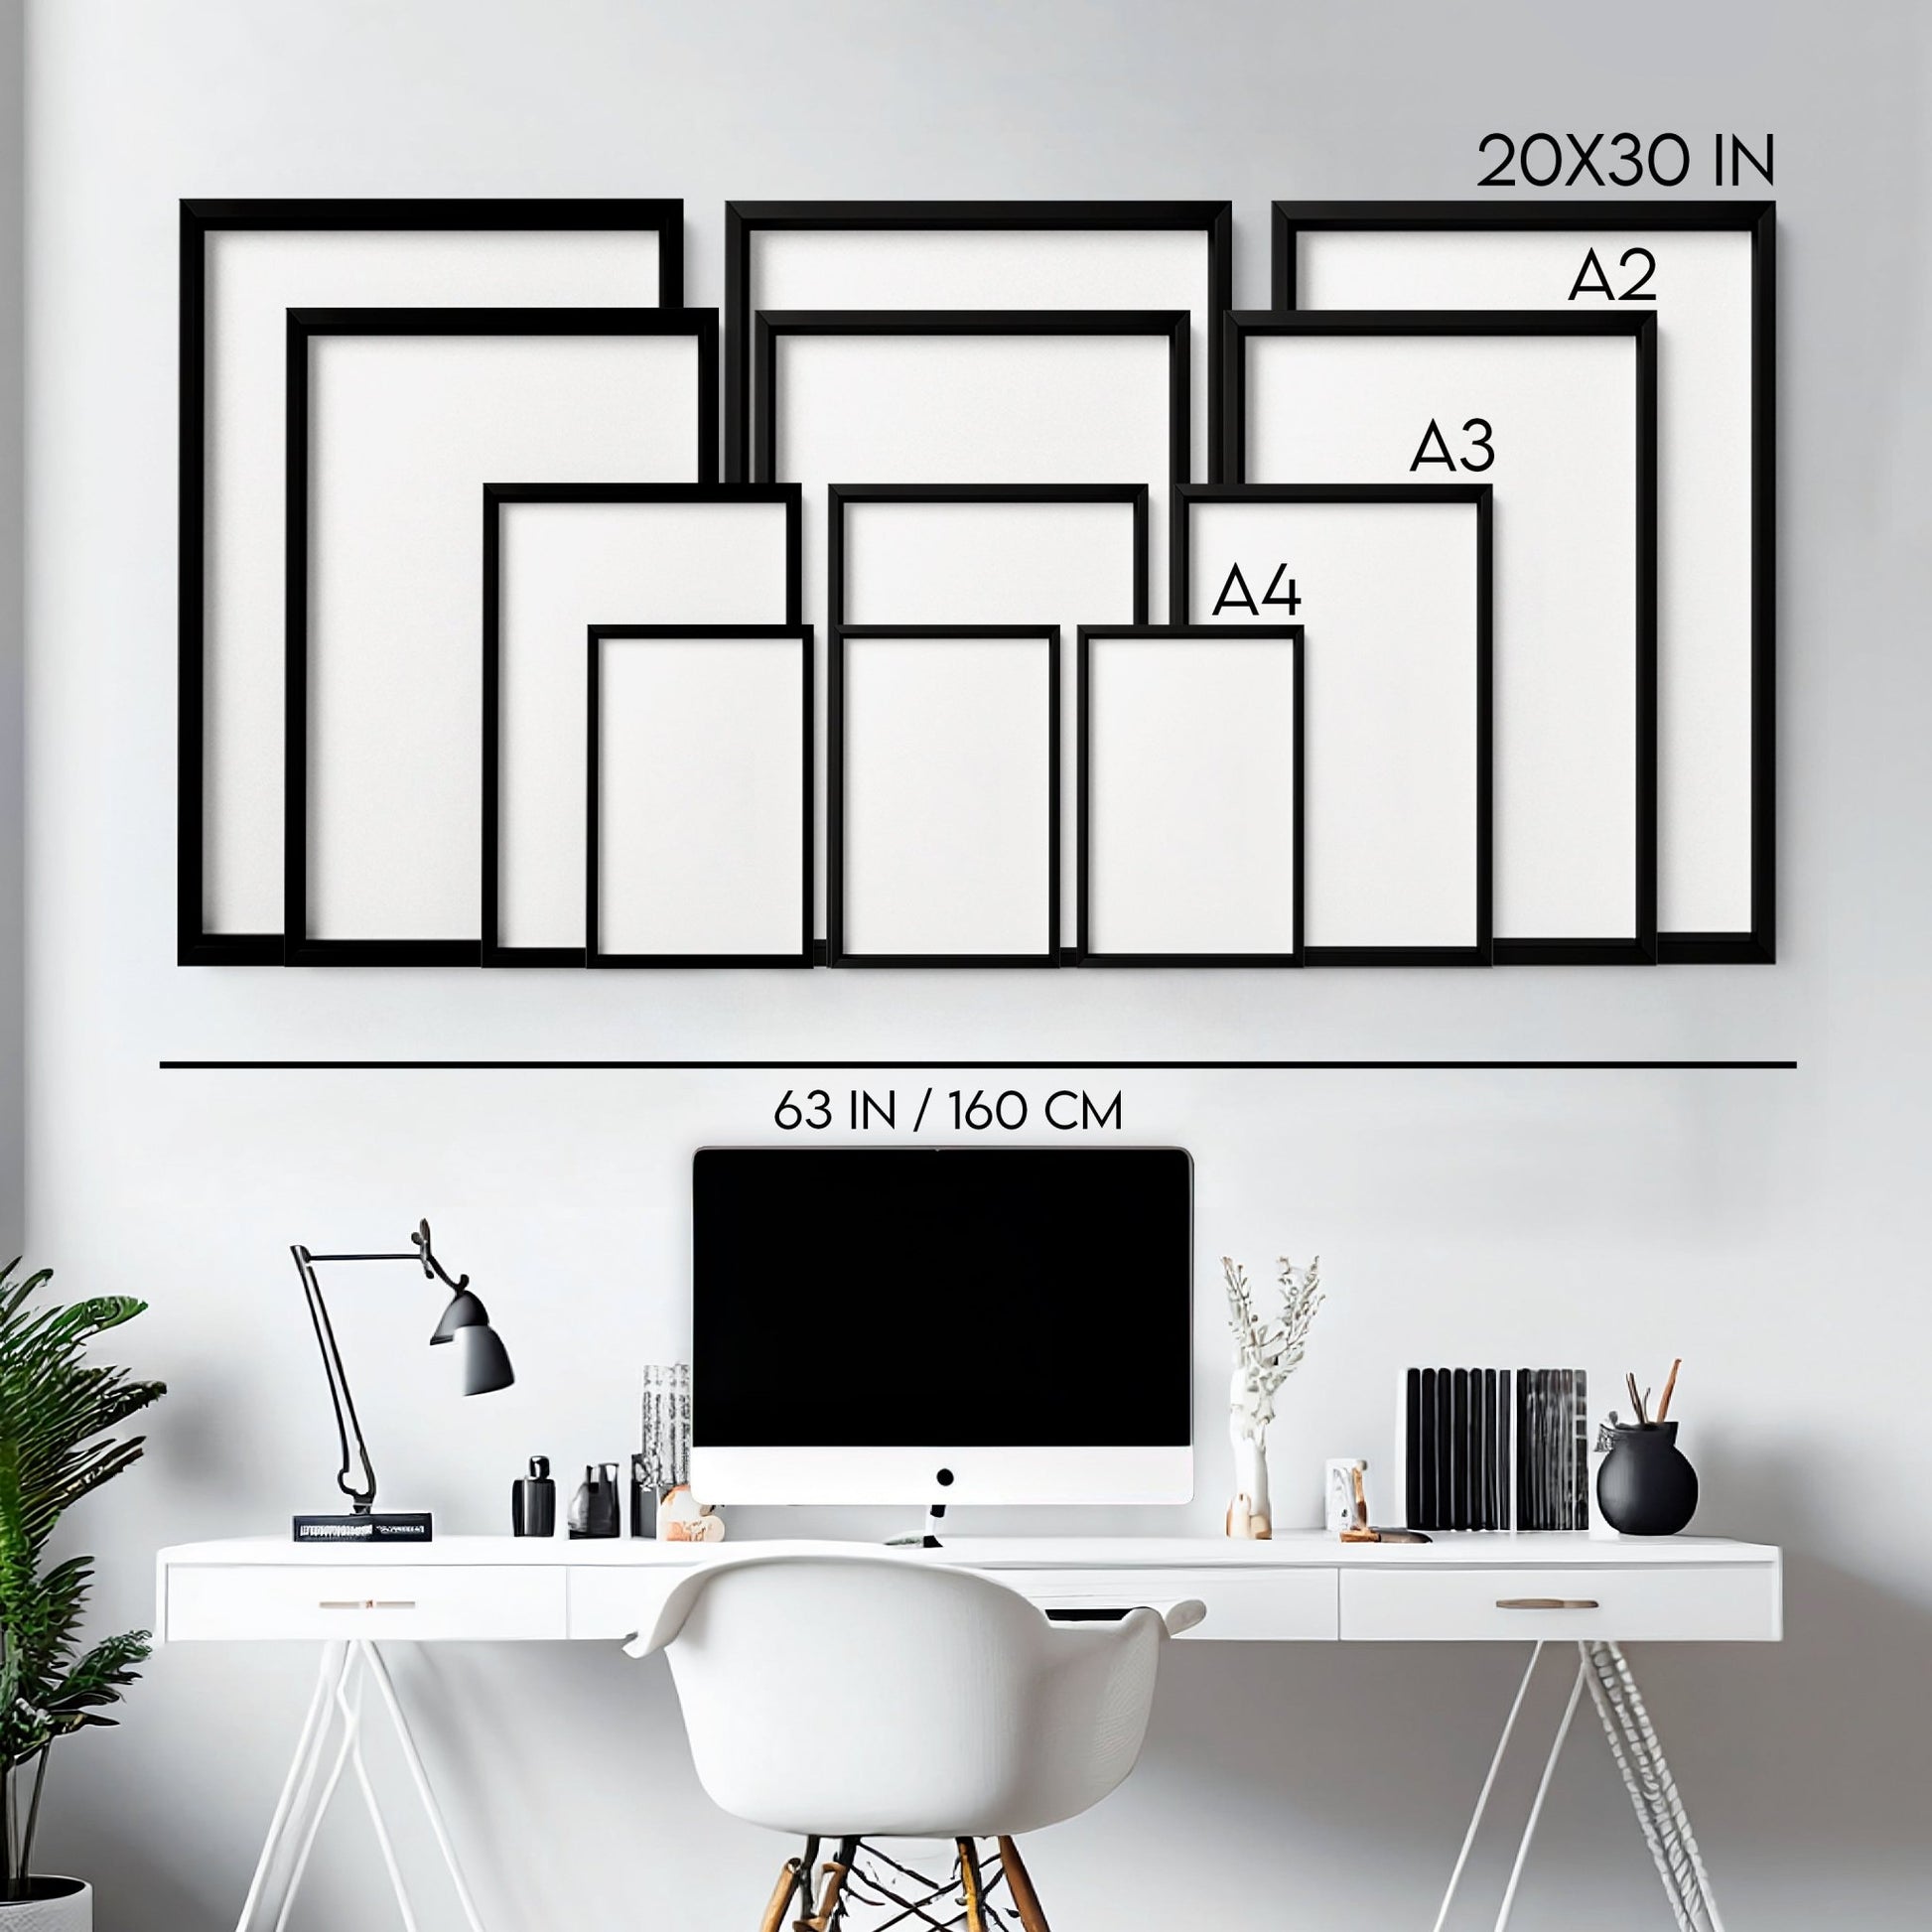 Scandinavian style decor for office | set of 3 wall art prints - About Wall Art